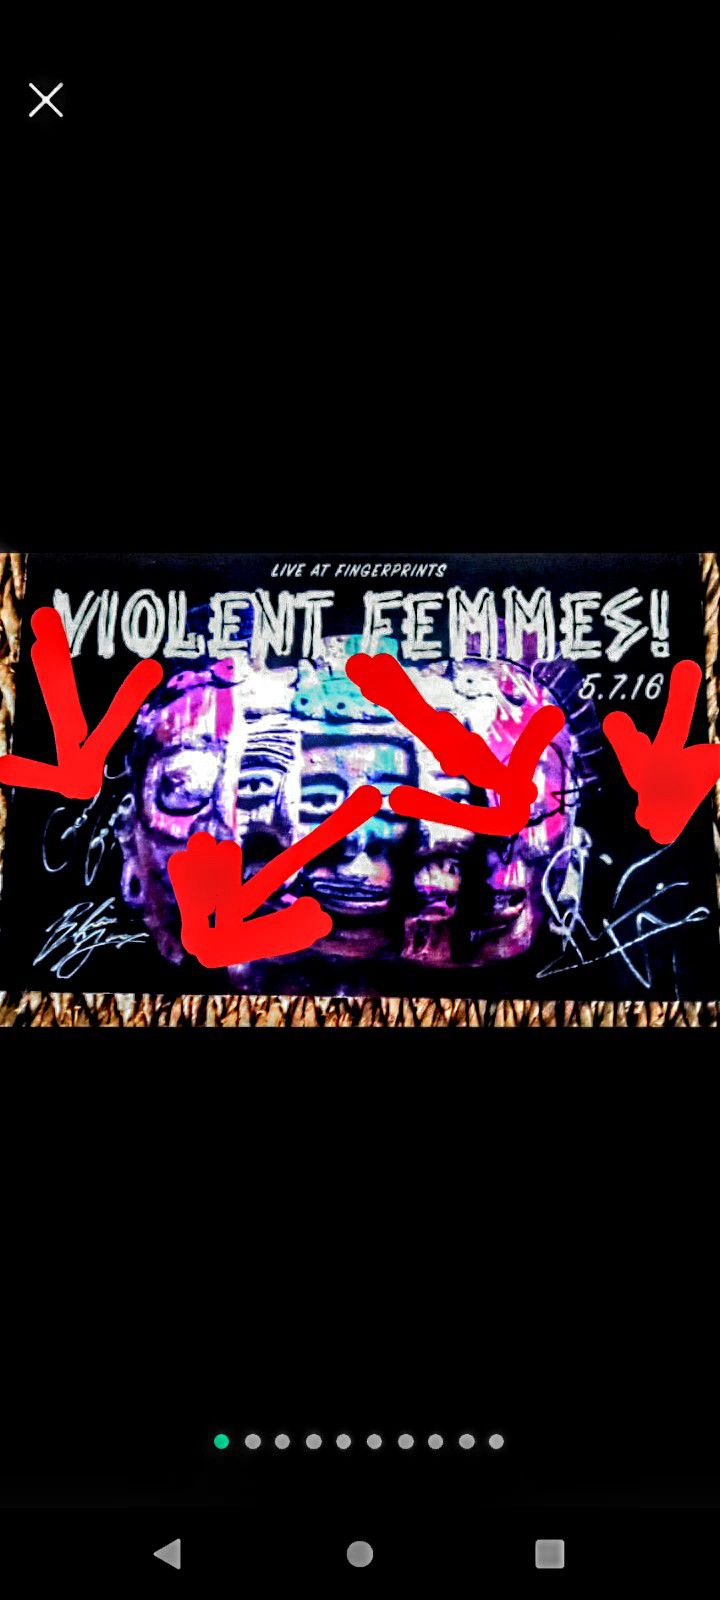 Violent Femmes autographed x  Band Poster 2016